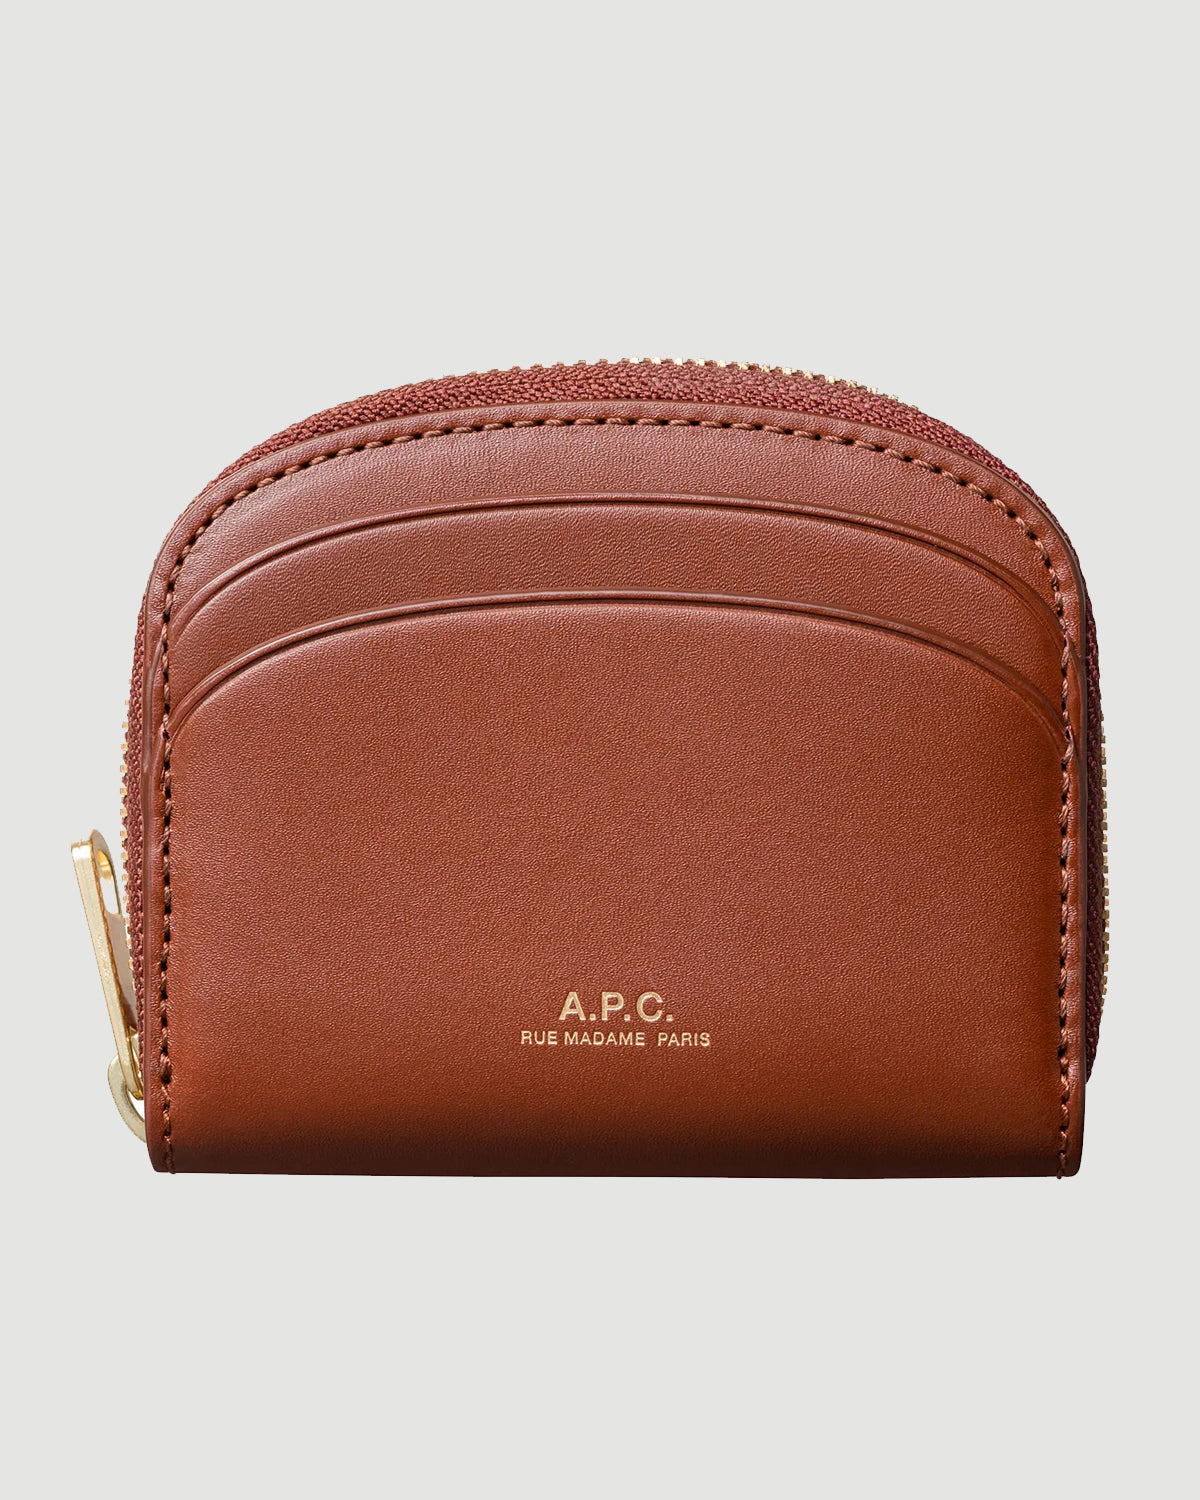 A.P.C. Compact Demi Lune Mini Noisette Leather Goods